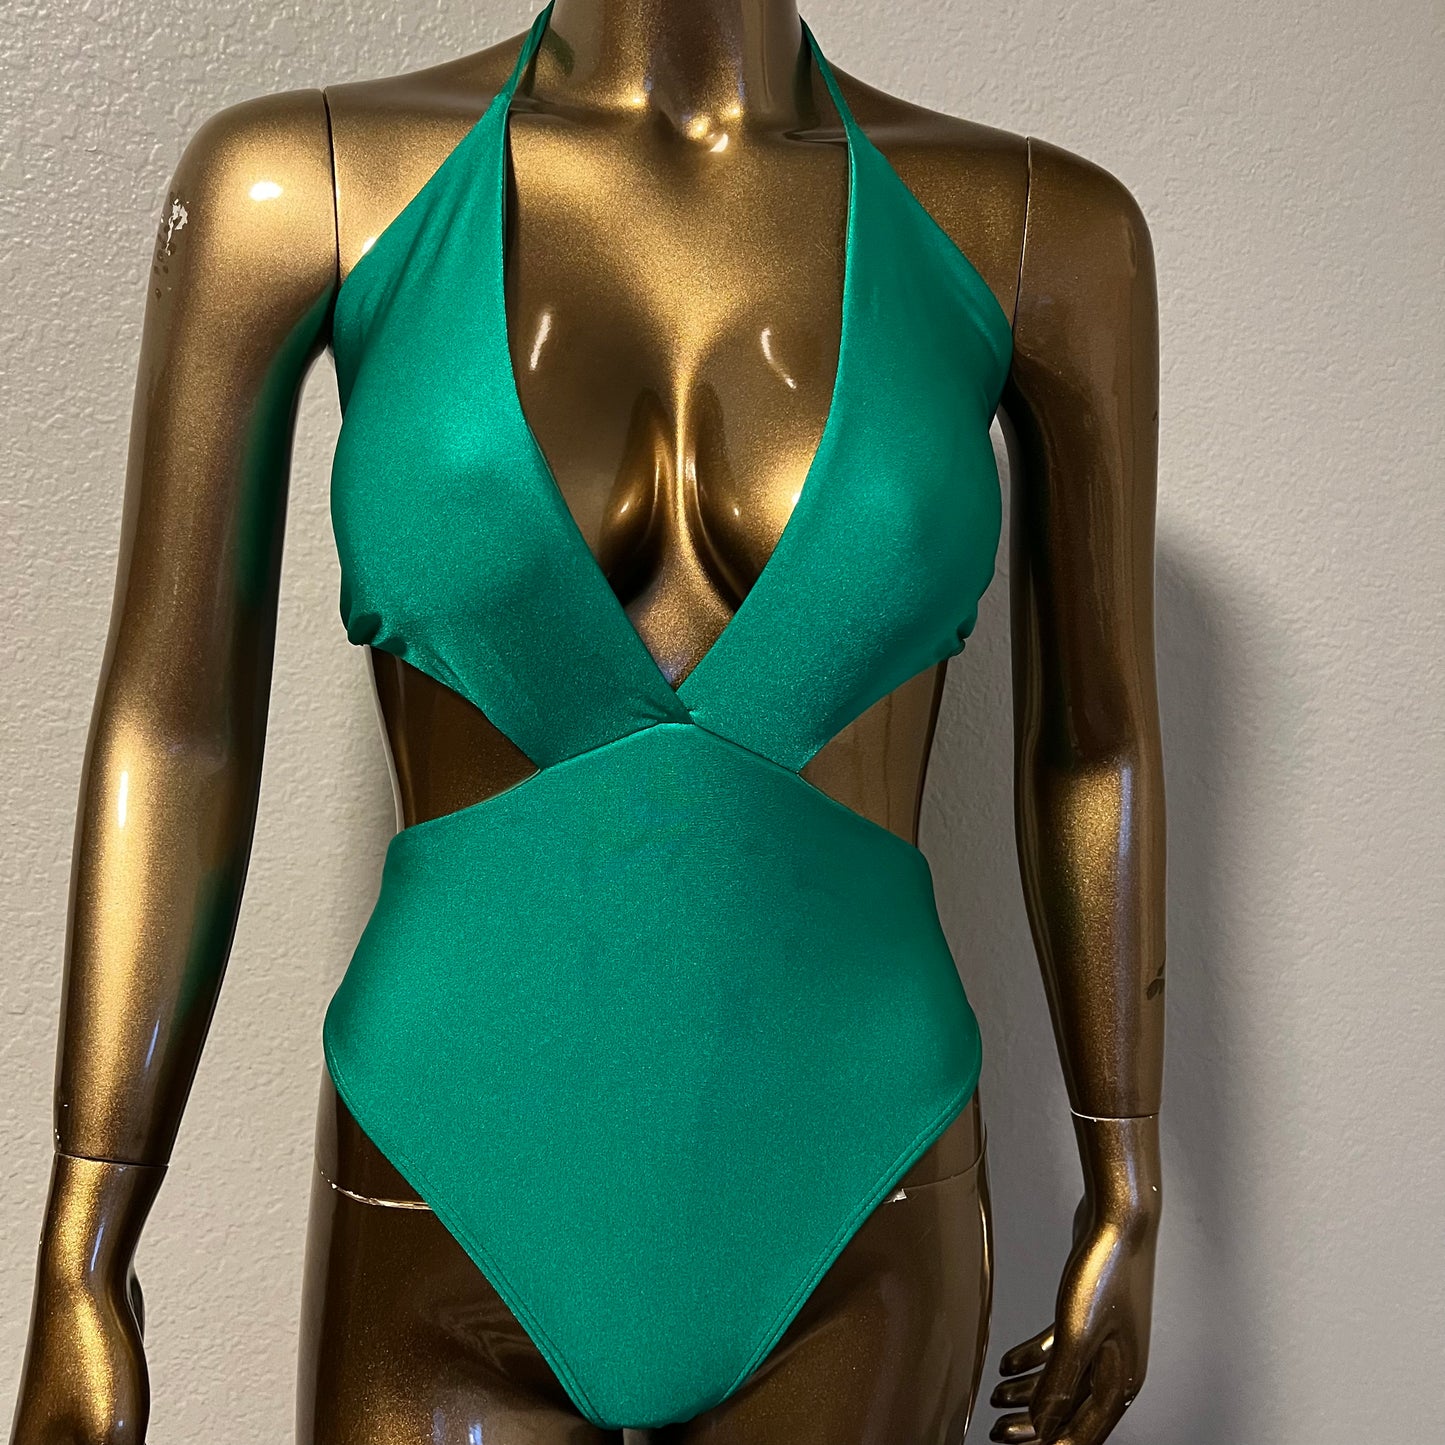 Waikiki Bodysuit/One Piece- Emerald Green - On The Lo Swimwear